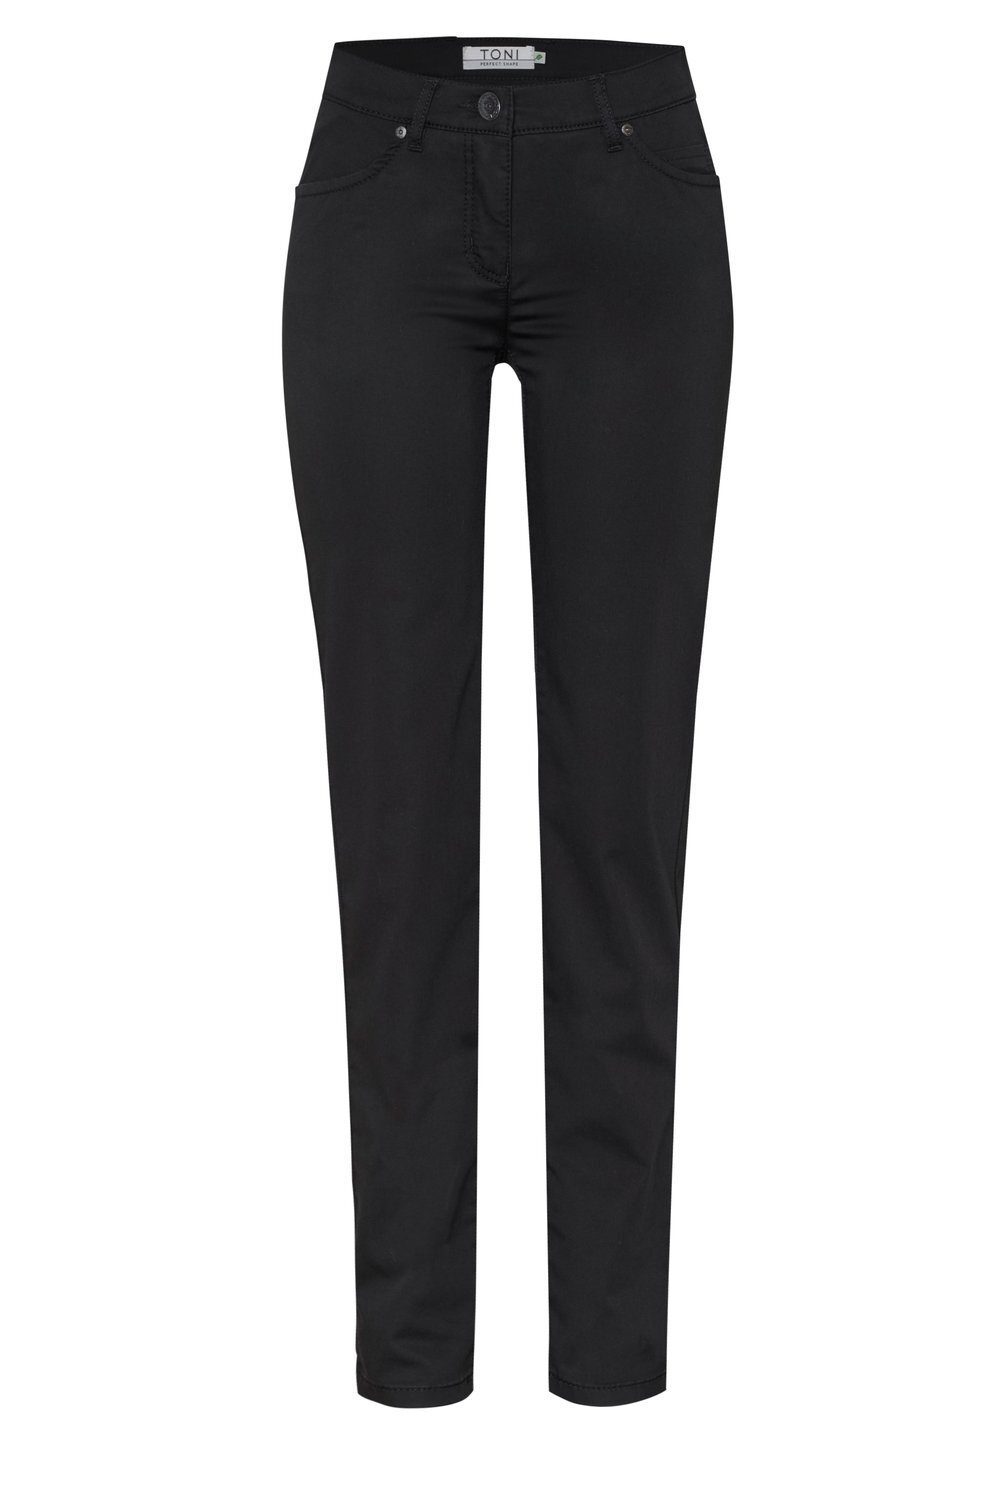 TONI 5-Pocket-Hose Perfect Shape aus schwarz softer Baumwolle - 089